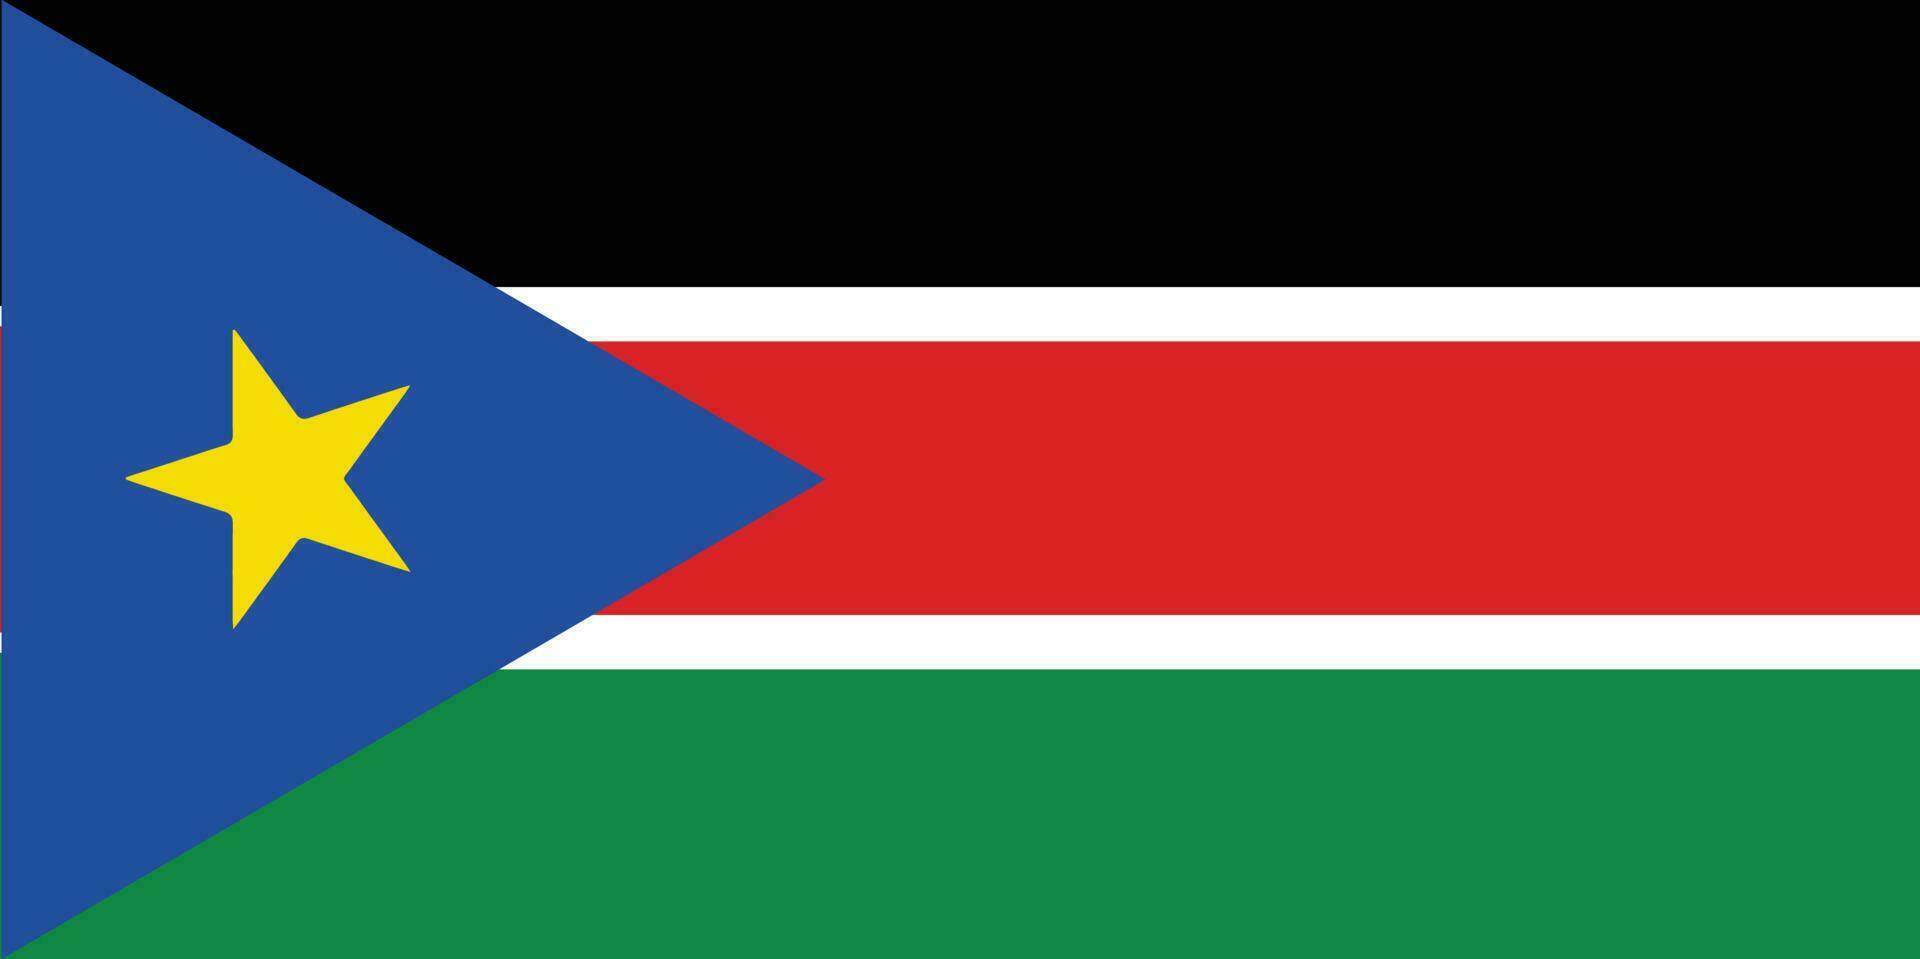 drapeau de Sud soudan.national drapeau de Sud Soudan vecteur